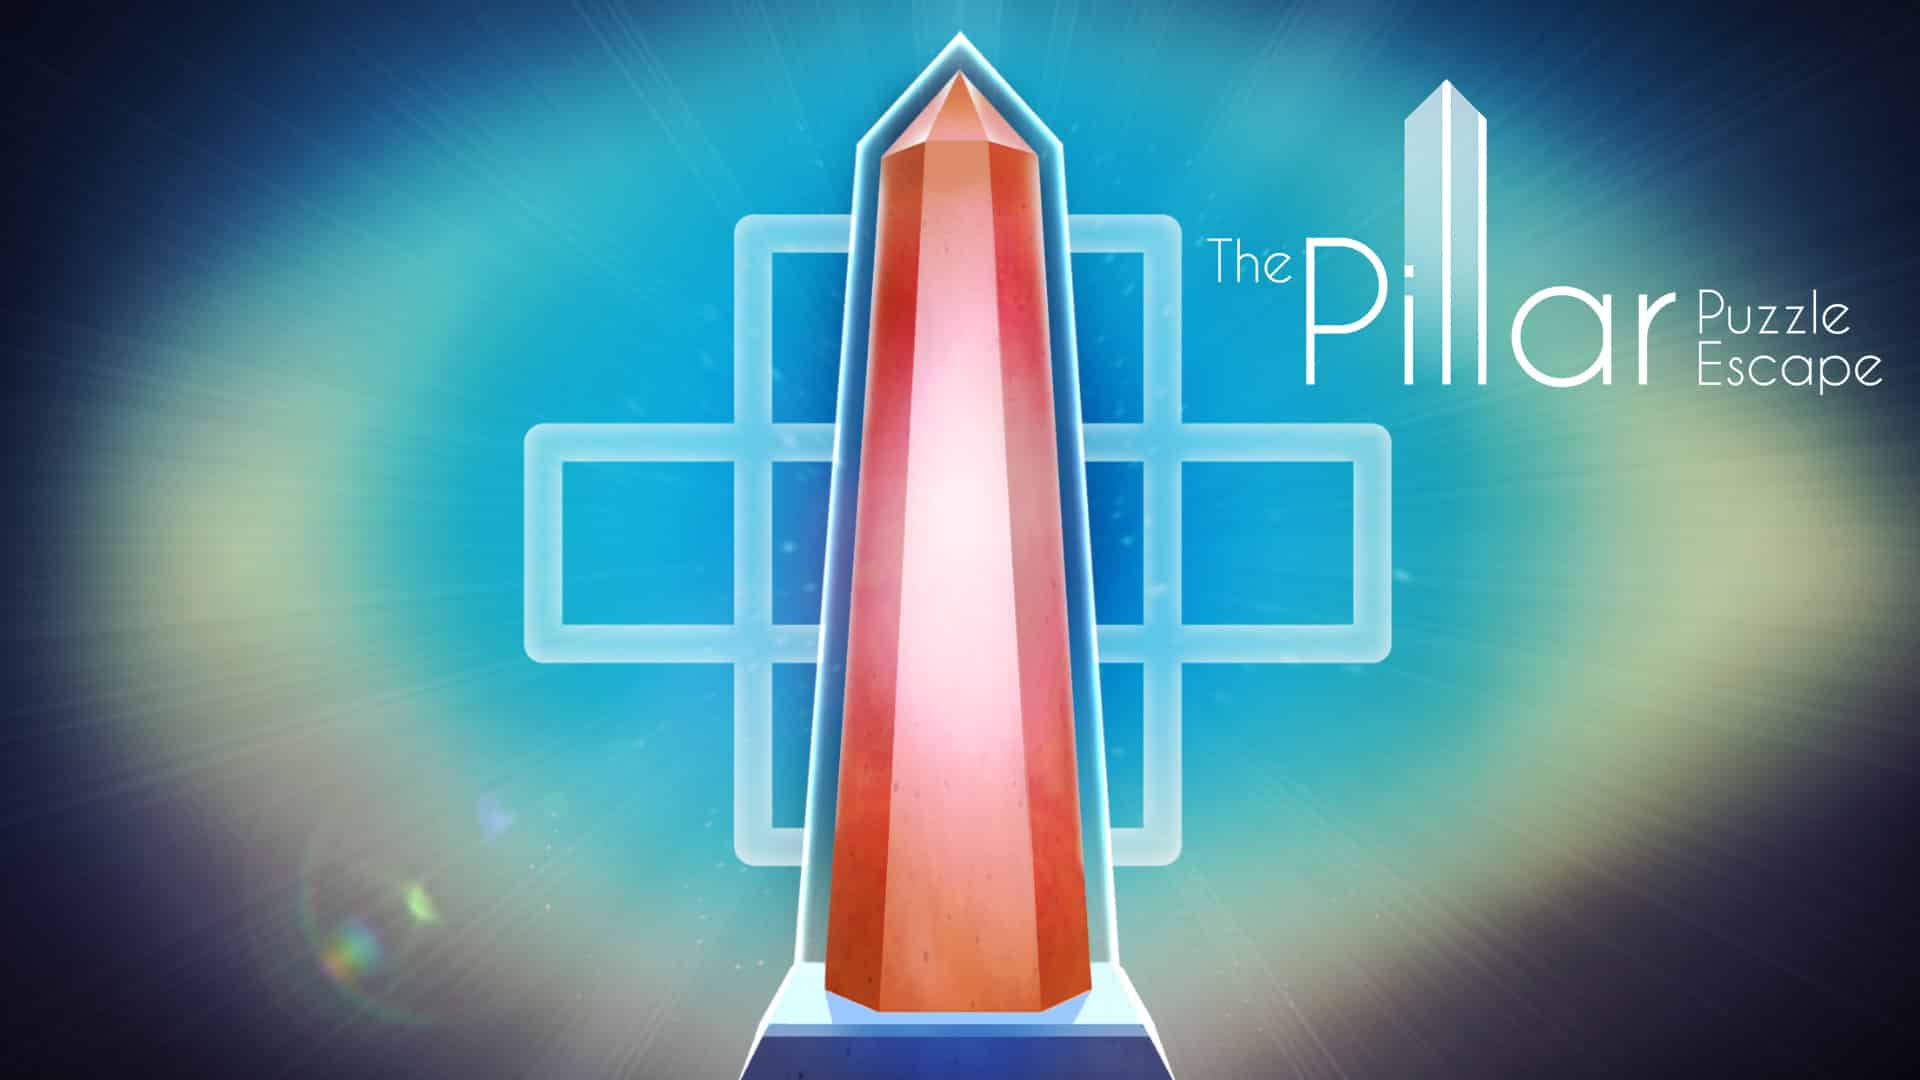 The Pillar Puzzle Escape logo